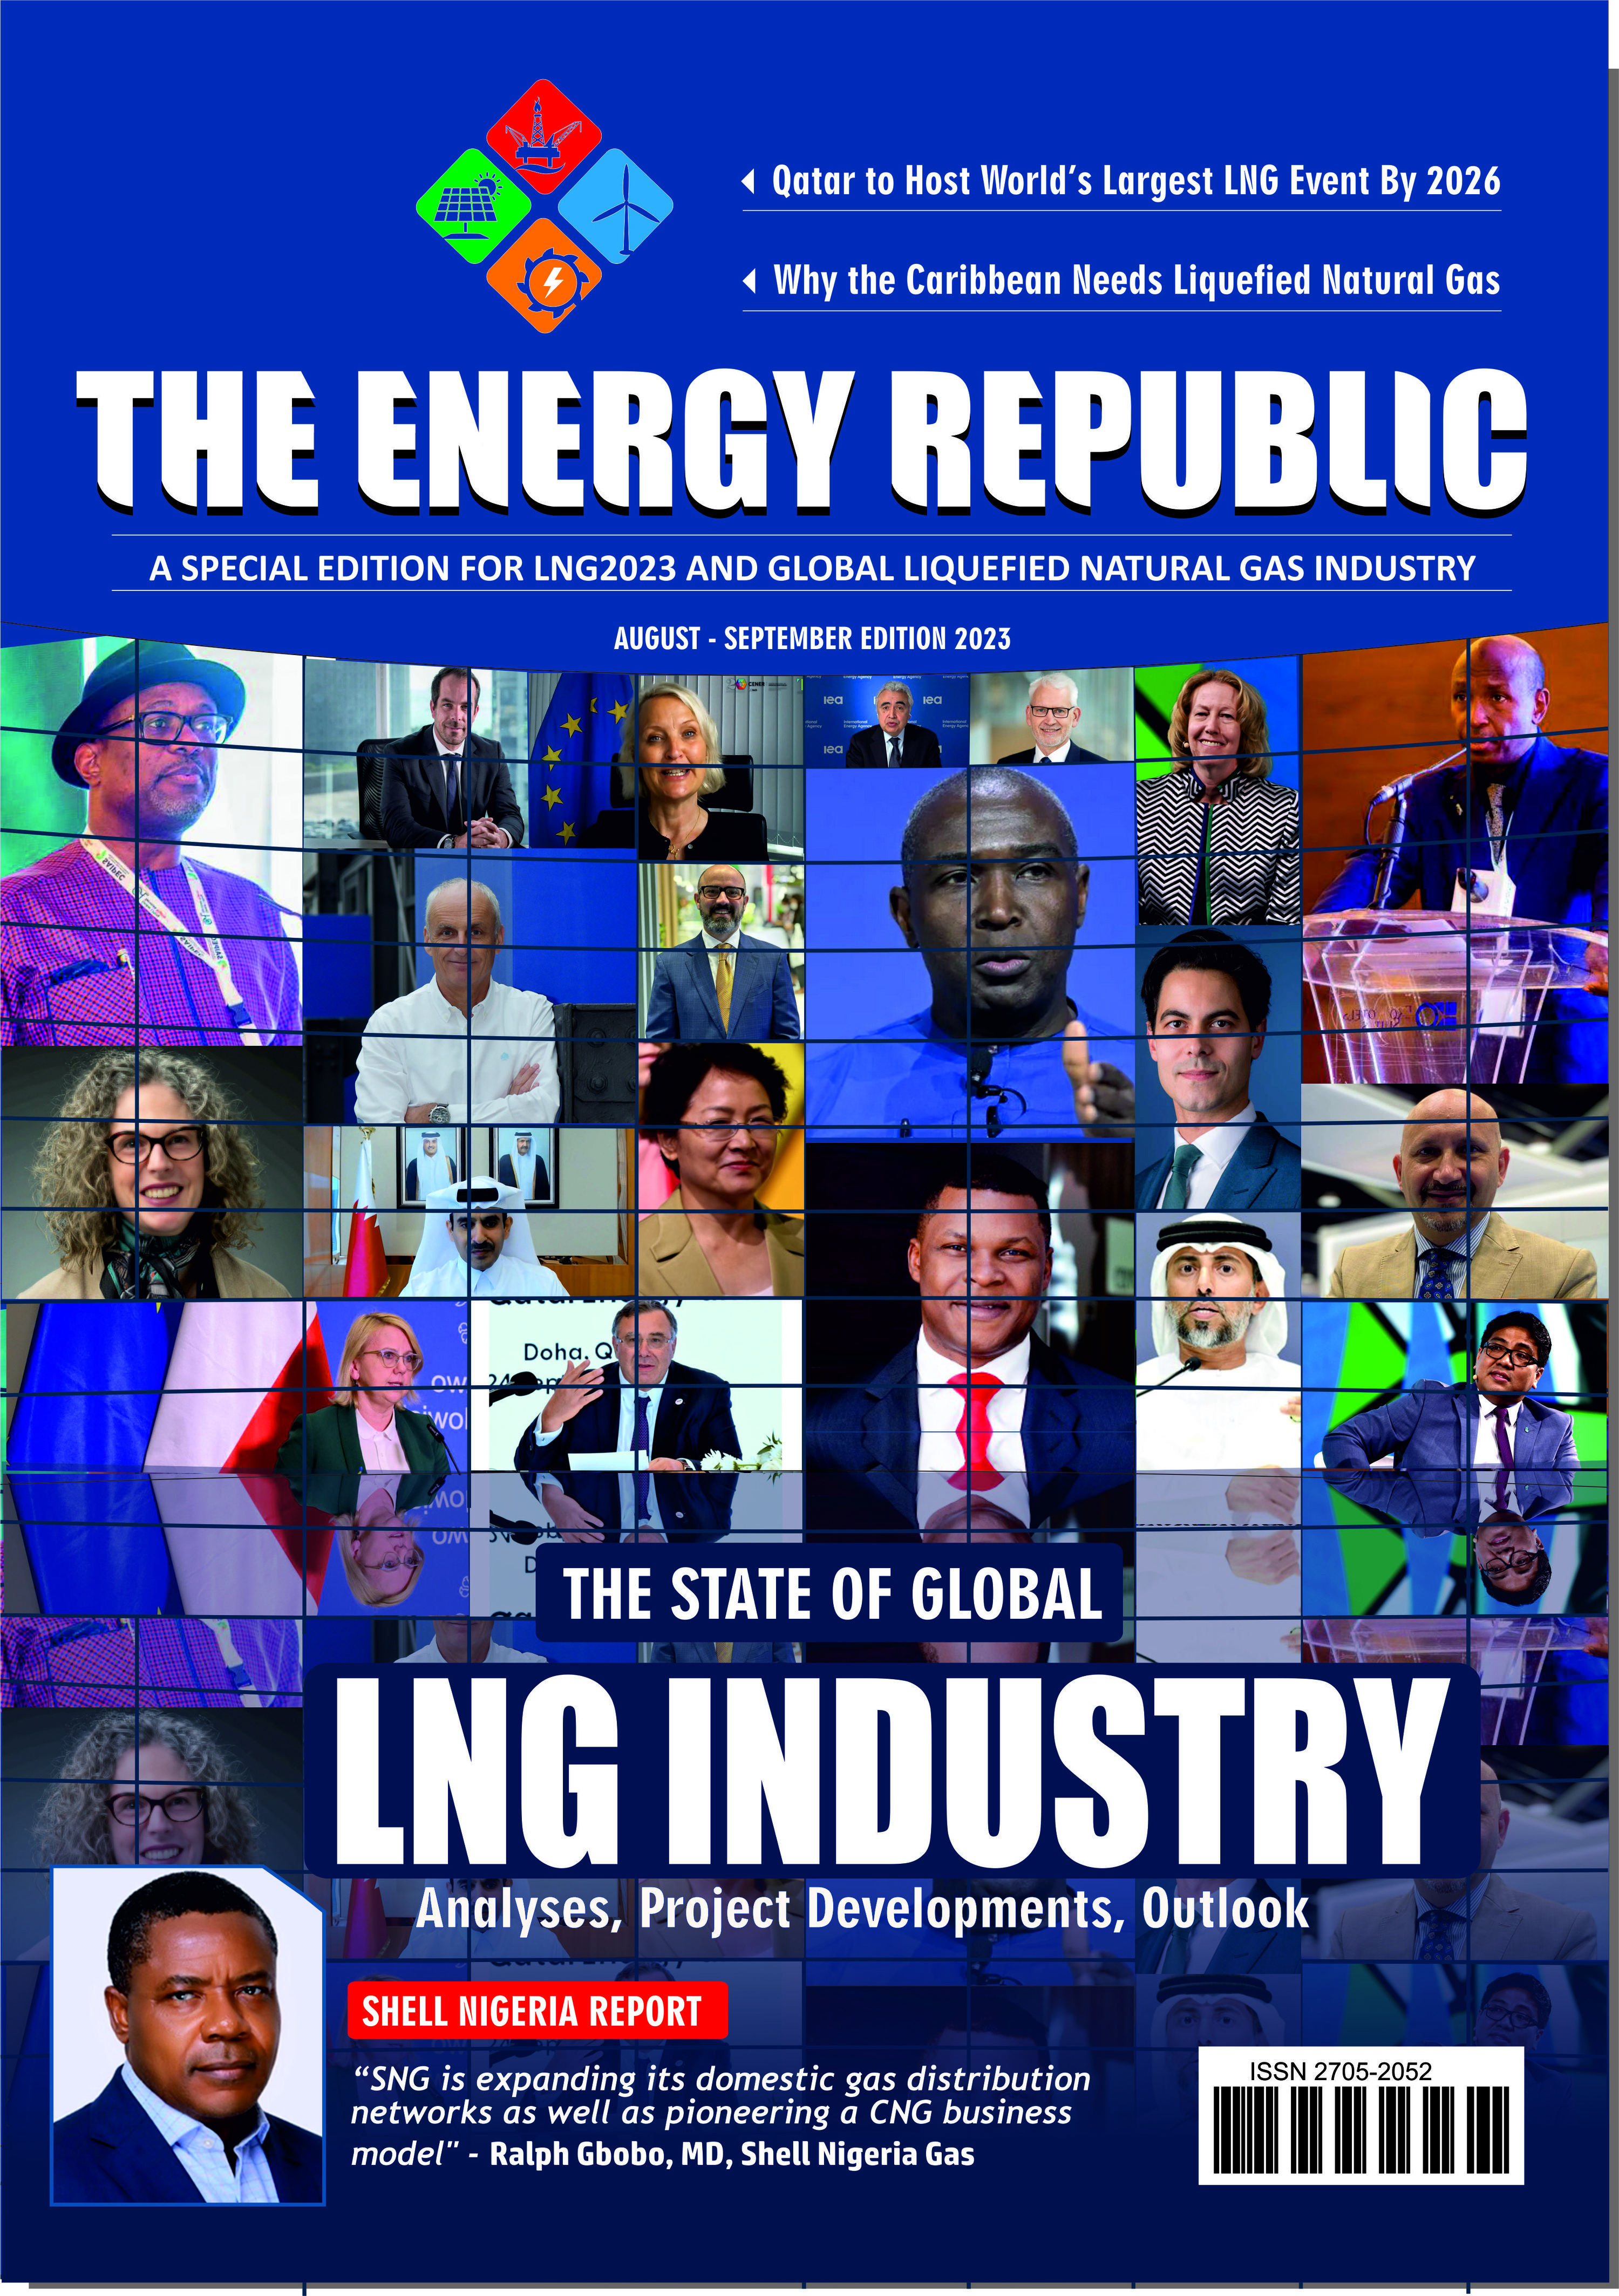 The Energy Republic September Edition 2023